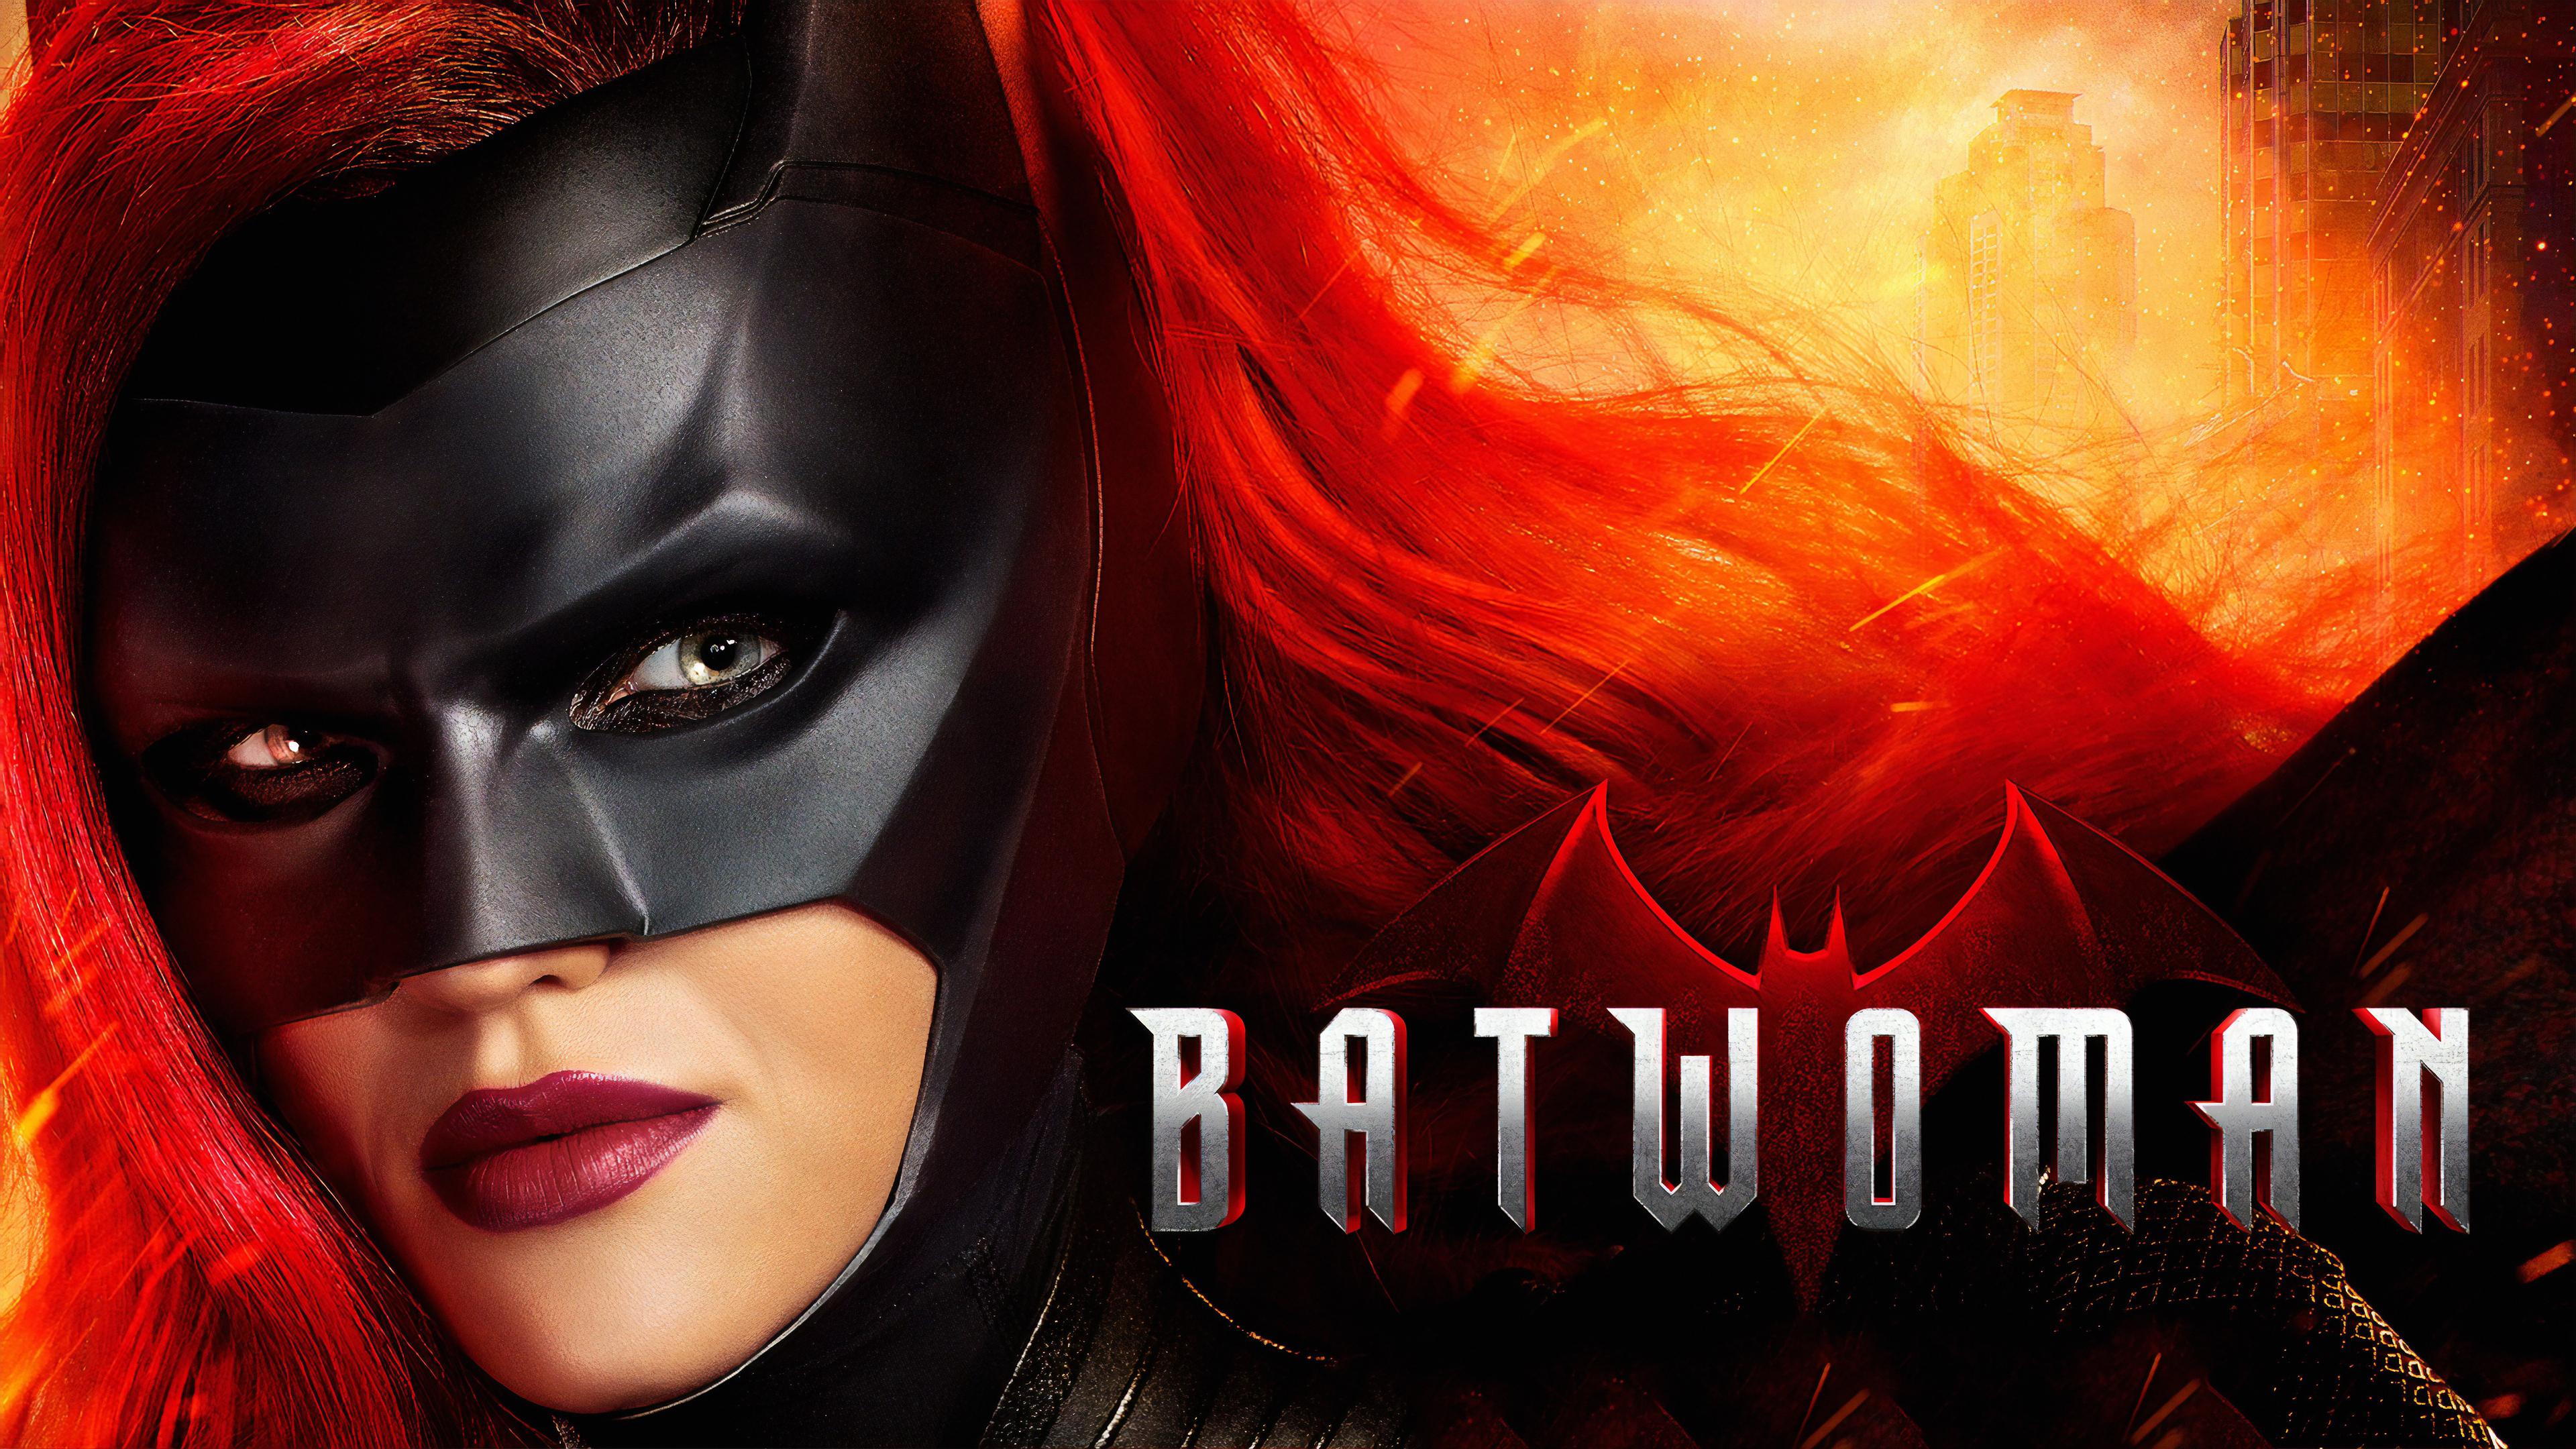 4k Batwoman 2019 Ruby Rose, HD Tv Shows, 4k Wallpaper, Image